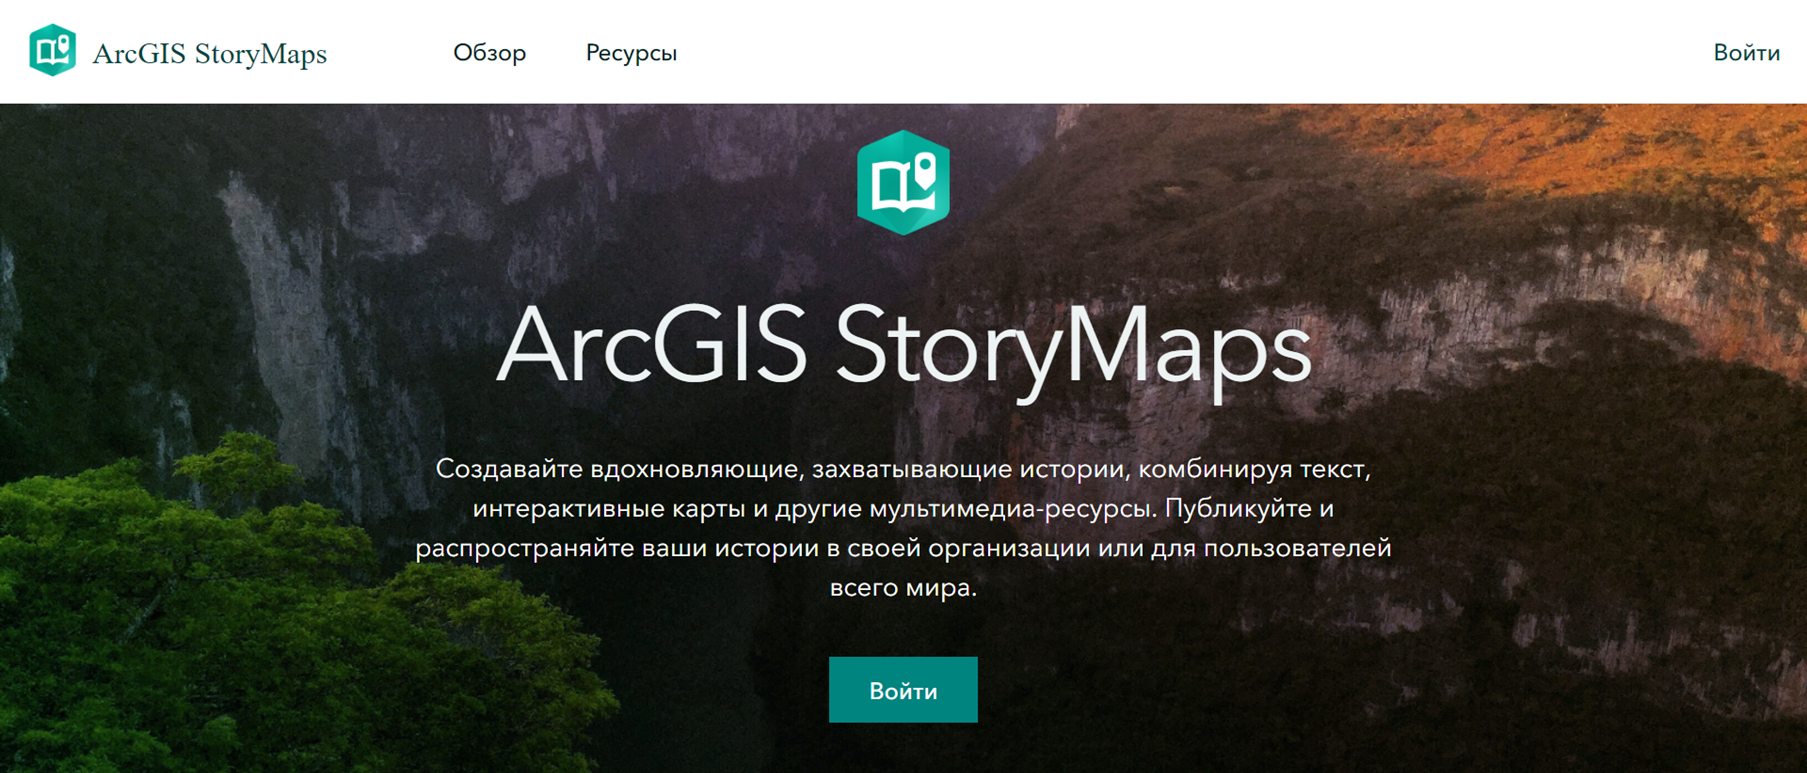 ArcGIS StoryMaps: история про историю